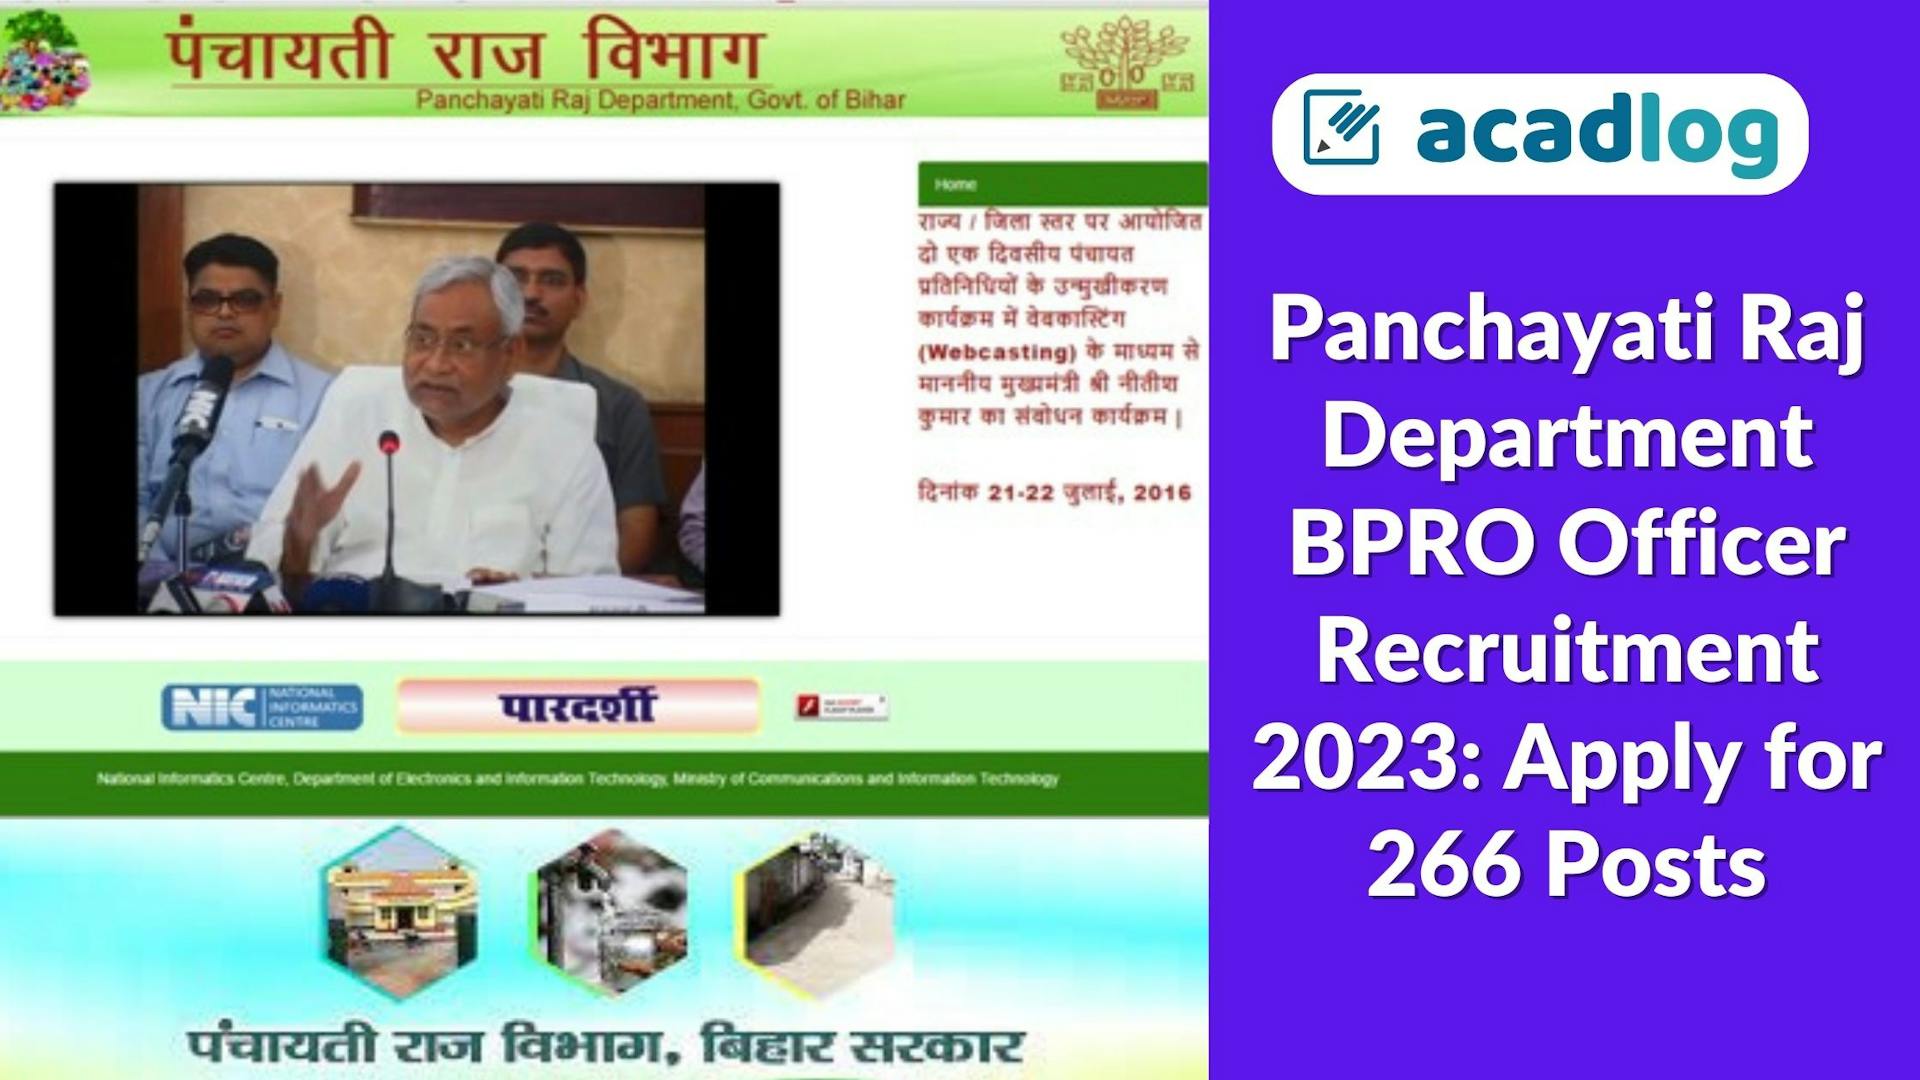 Panchayati Raj Department BPRO Officer Recruitment 2023: Apply for 266 Posts